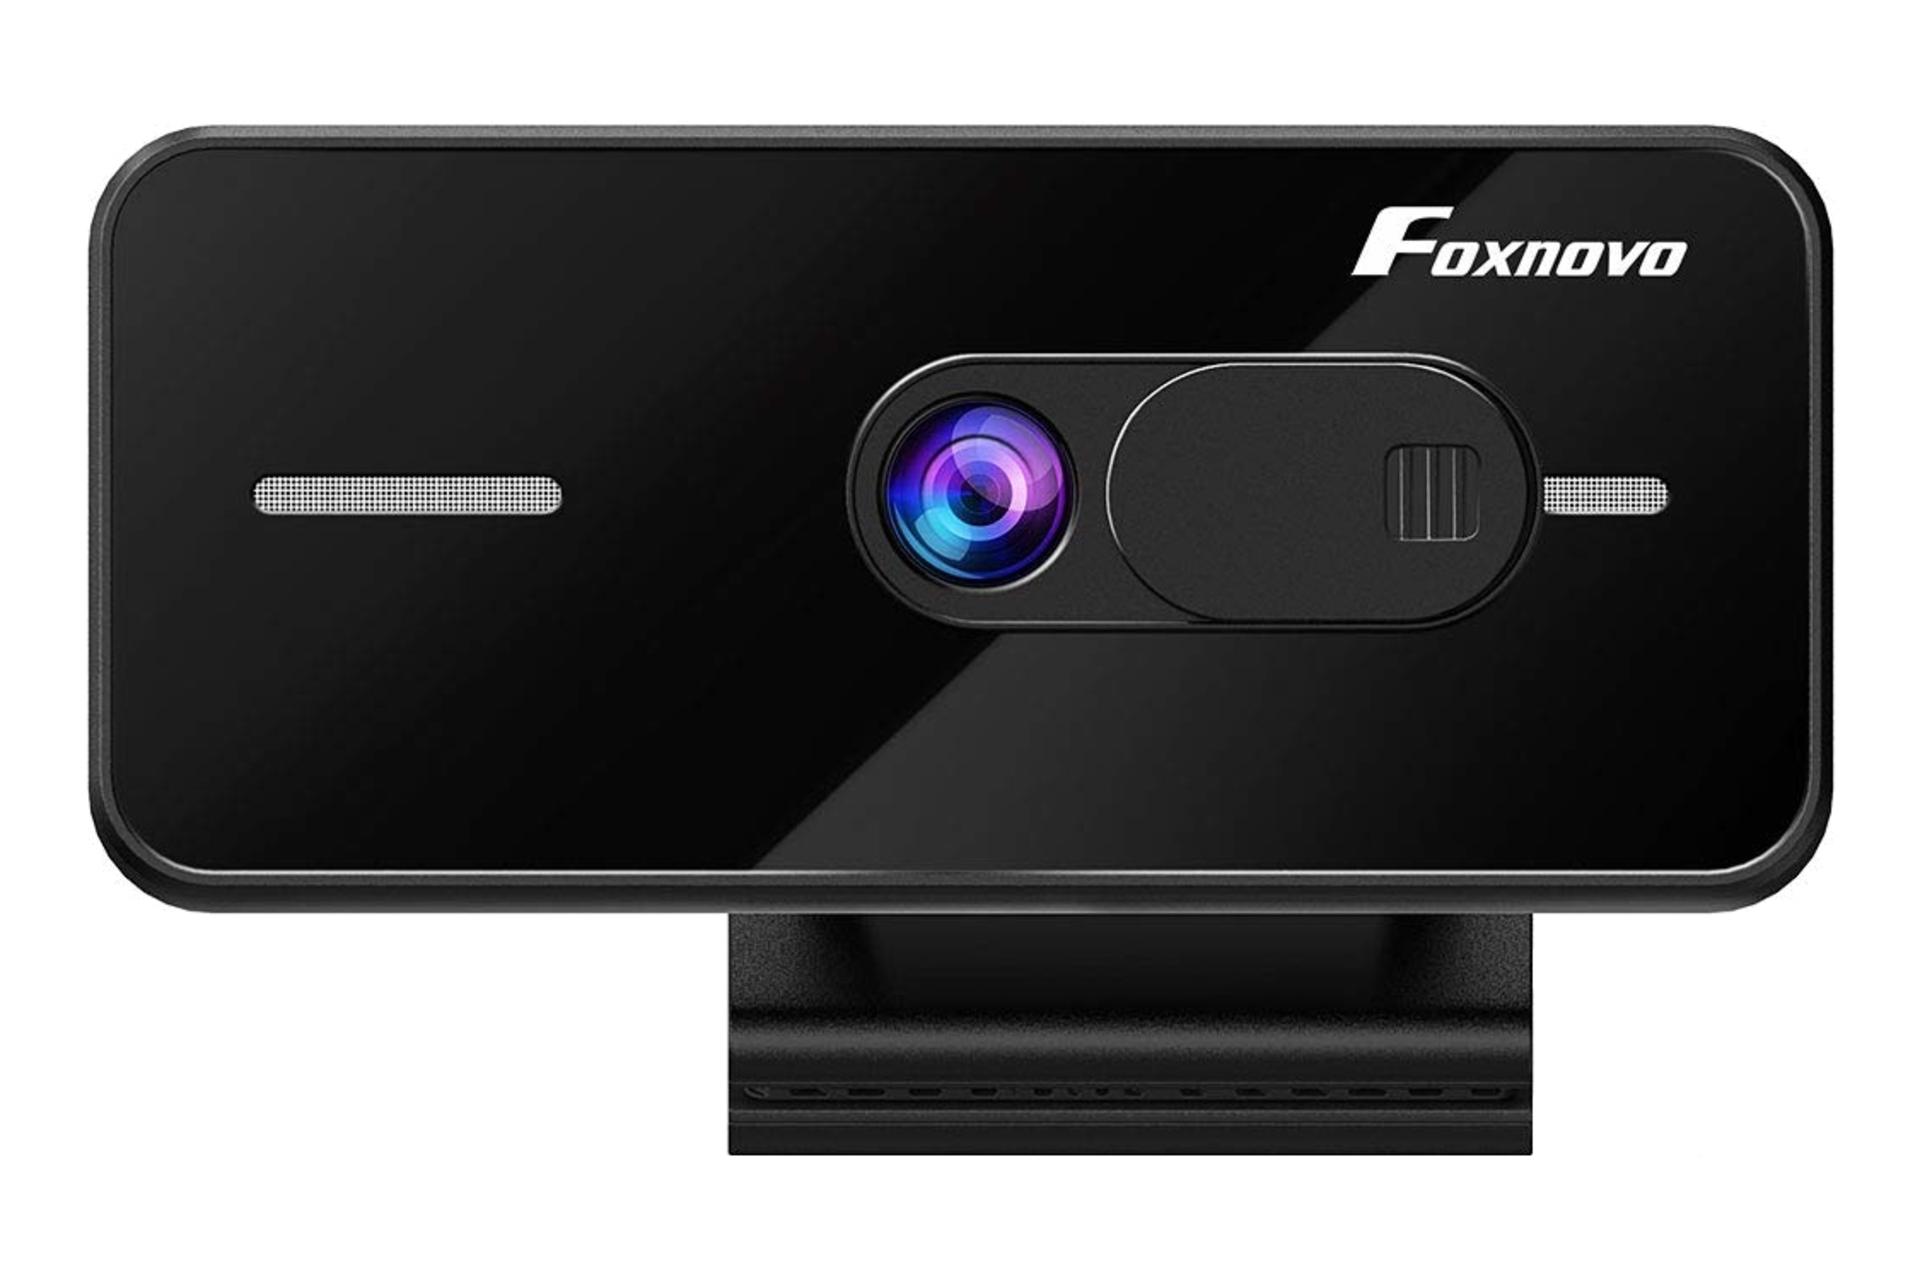 وب کم فاکس نوو Foxnovo 1080P Full HD Facial Enhancement